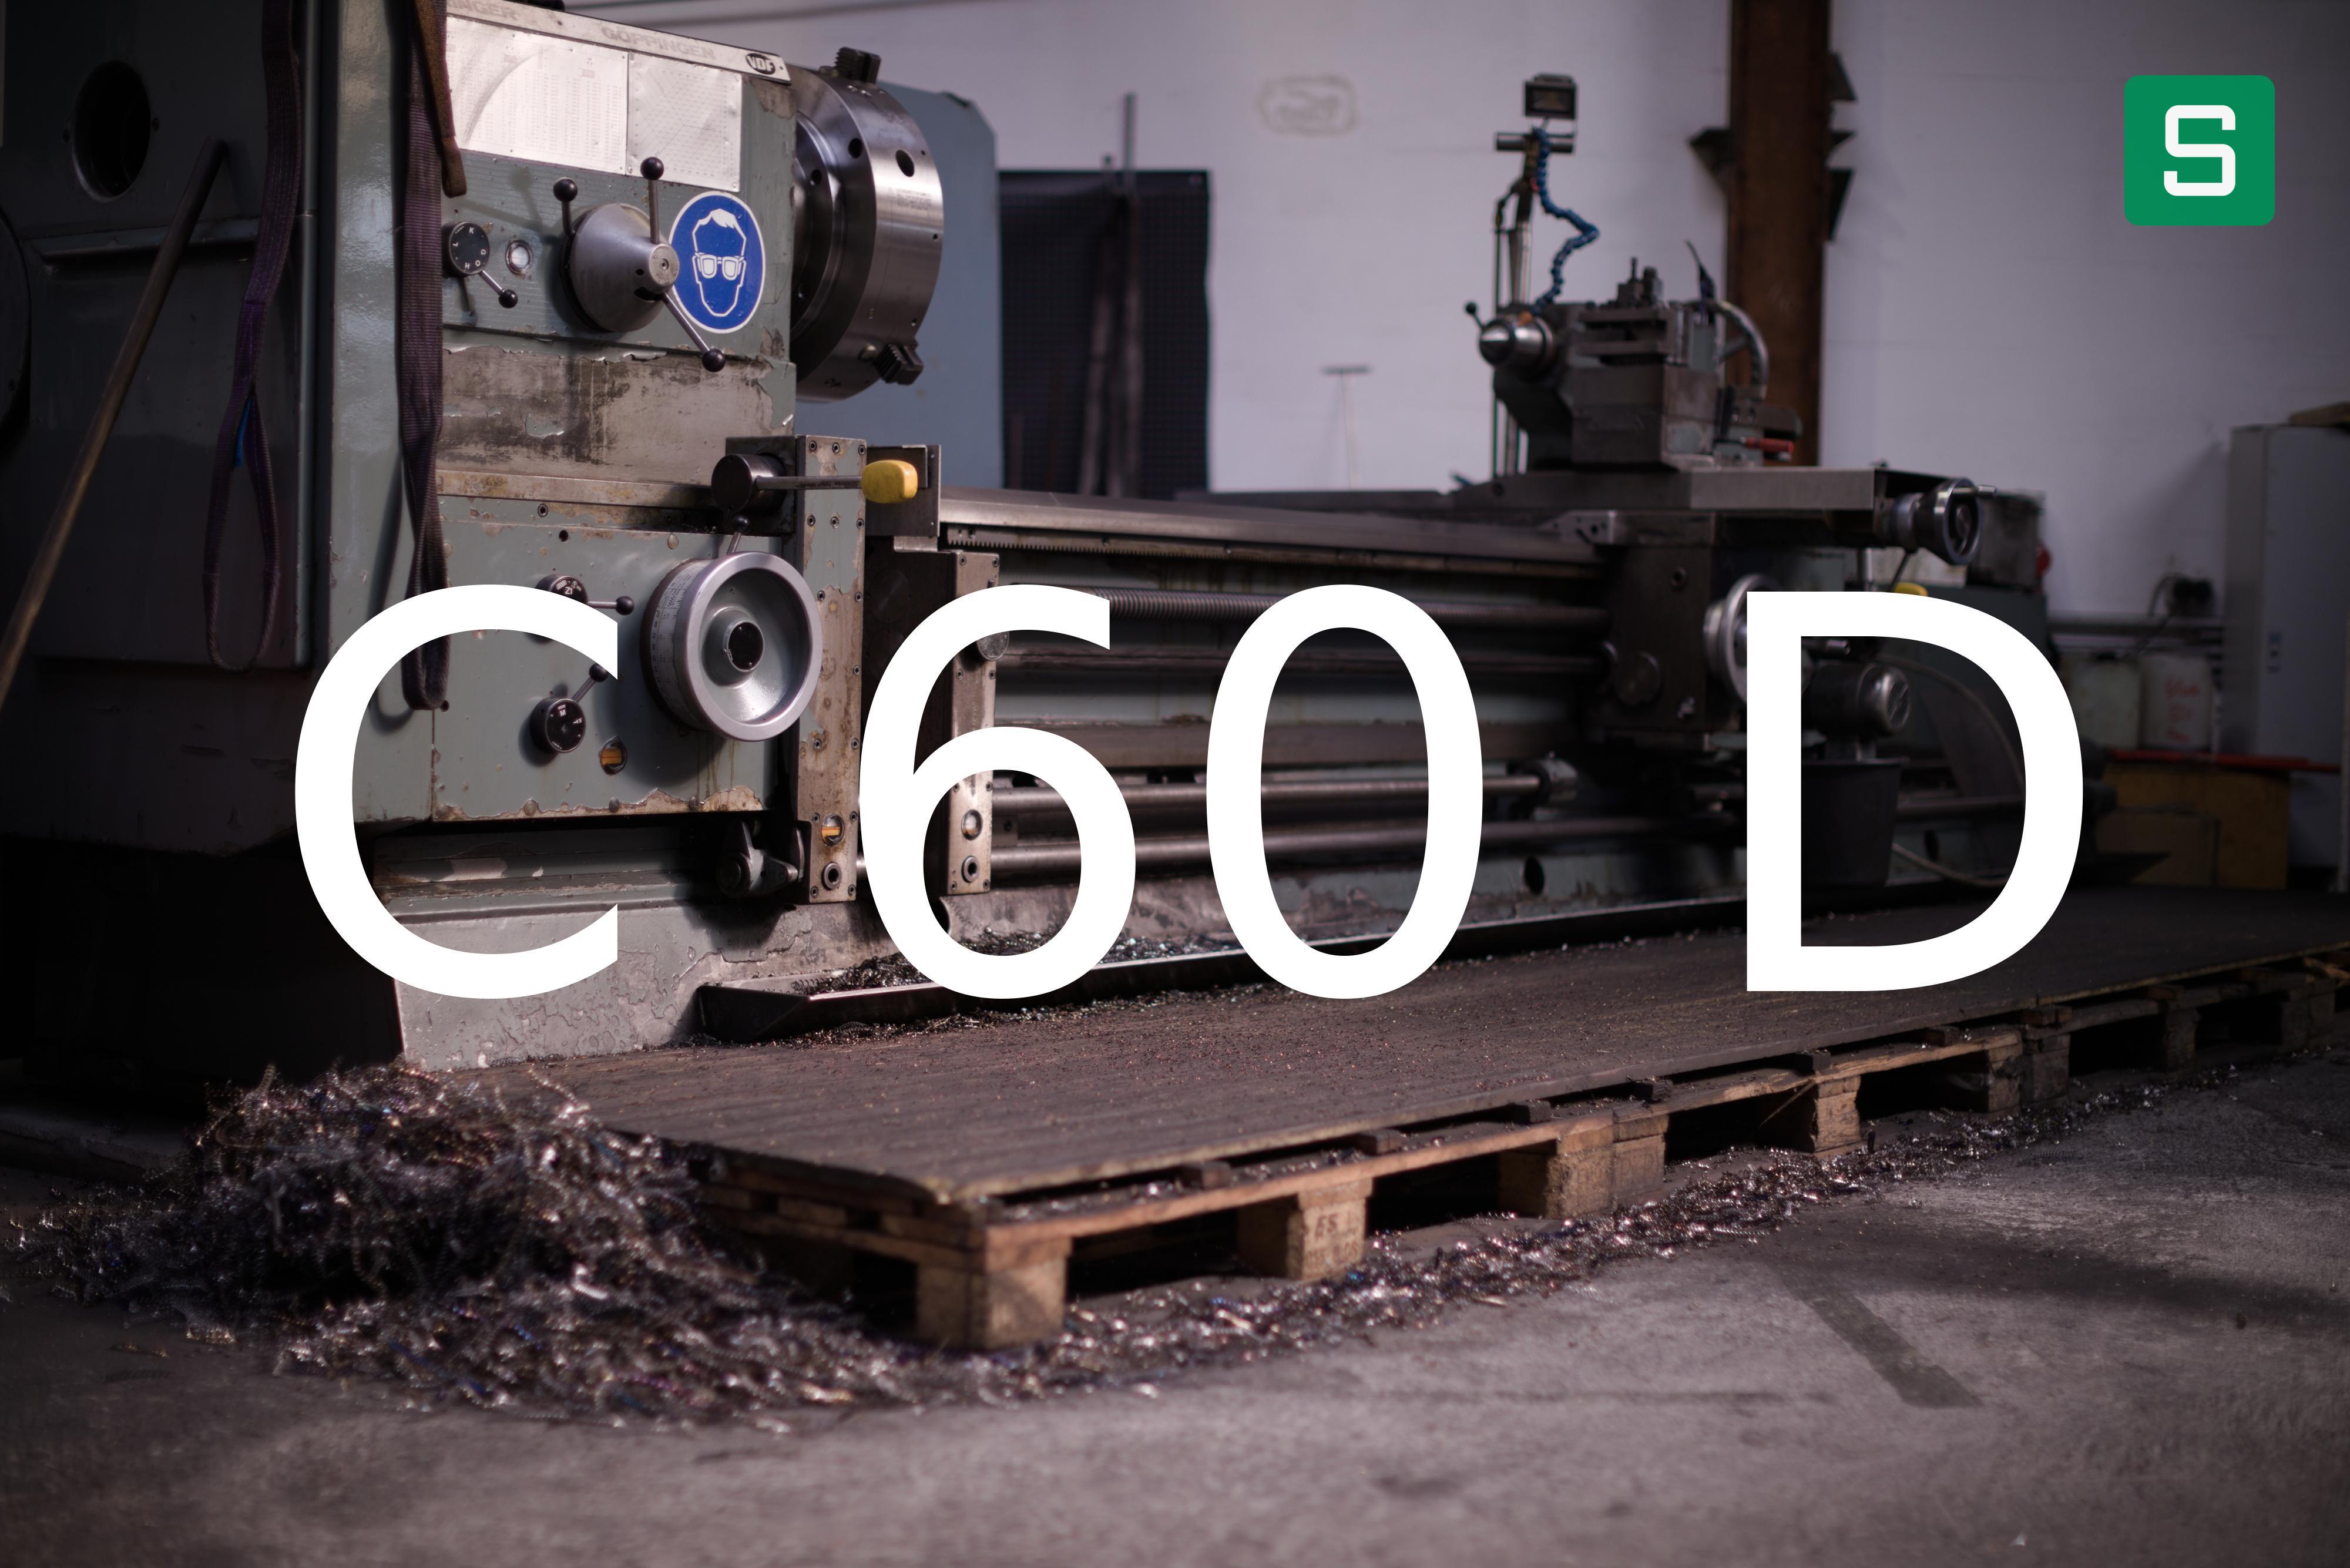 Steel Material: C 60 D